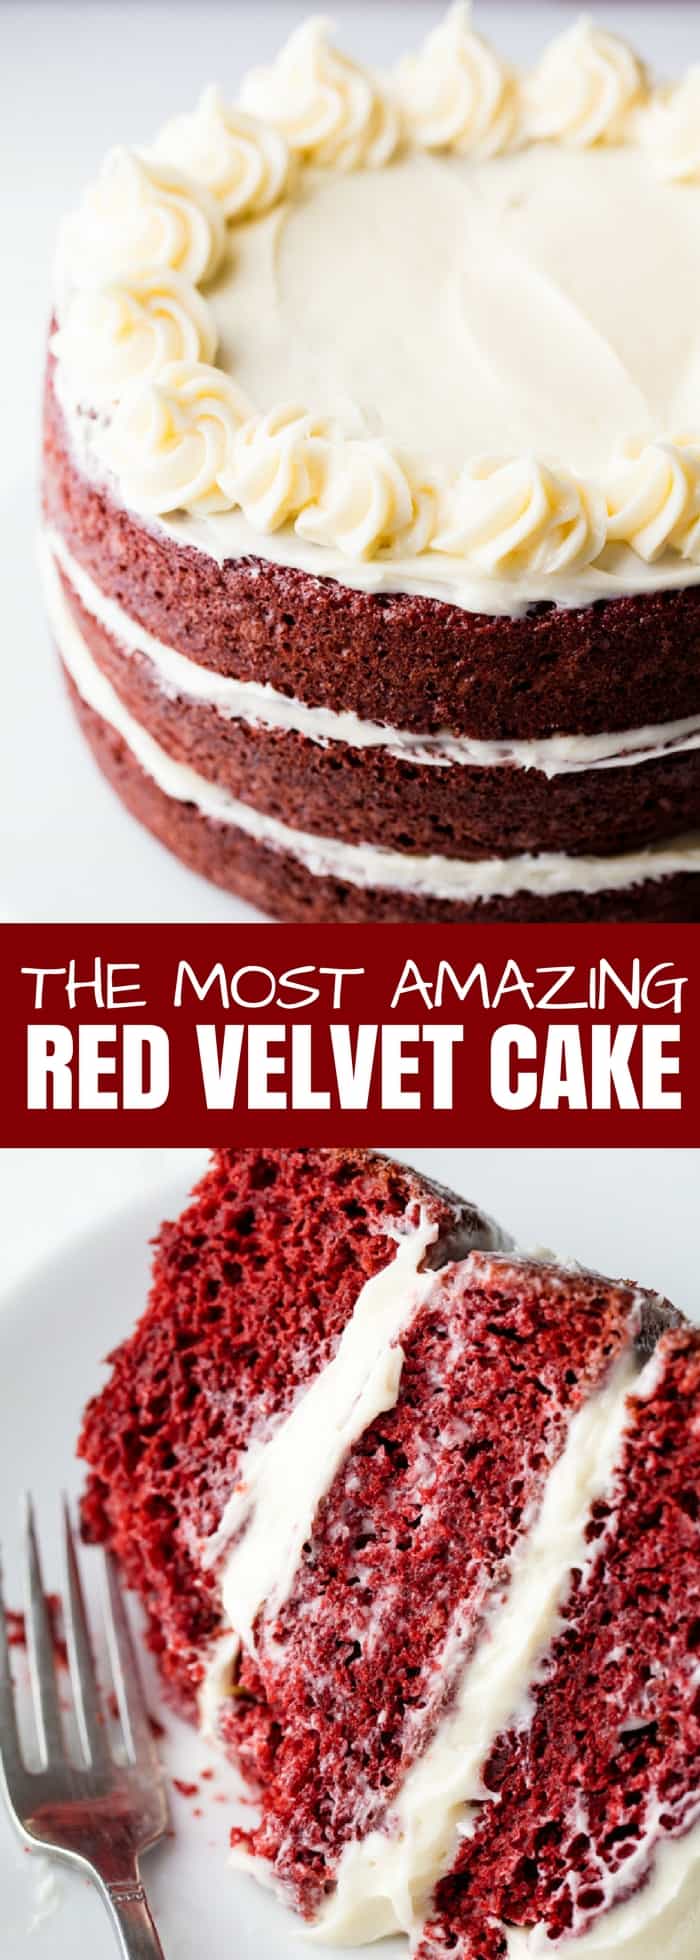 The Most Amazing Red Velvet Cake